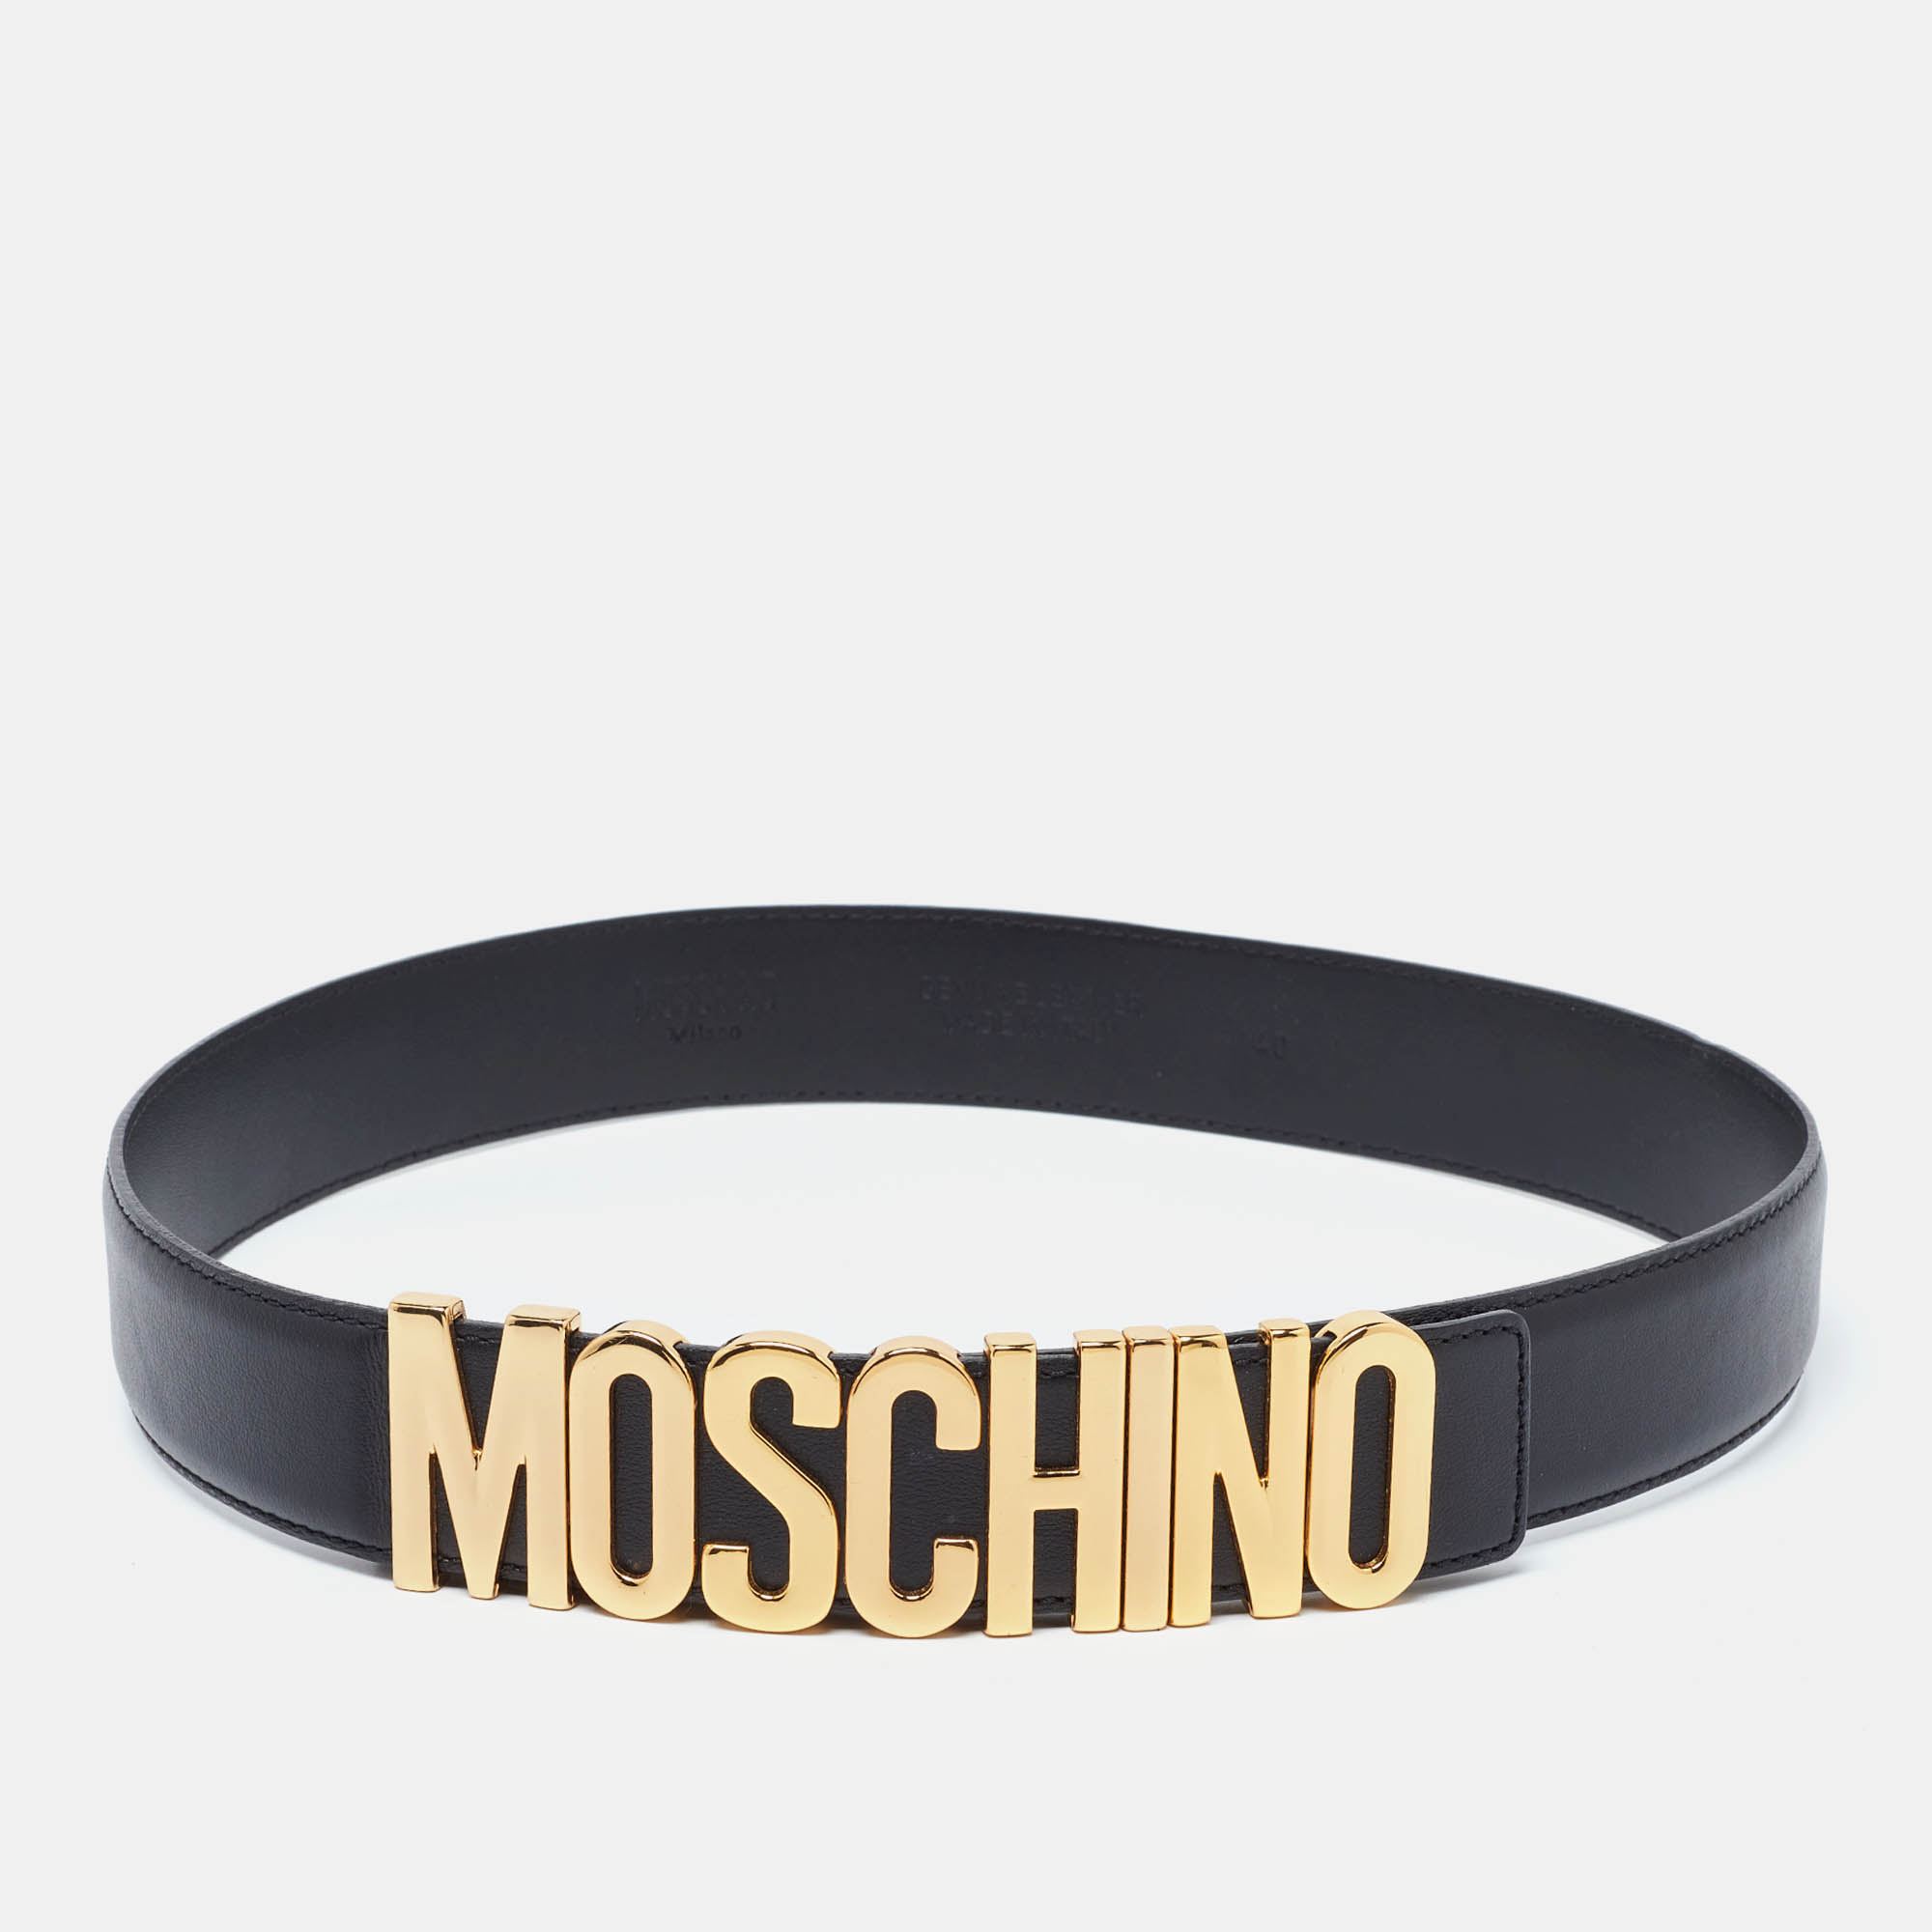 Moschino black leather classic logo wait belt size 75cm